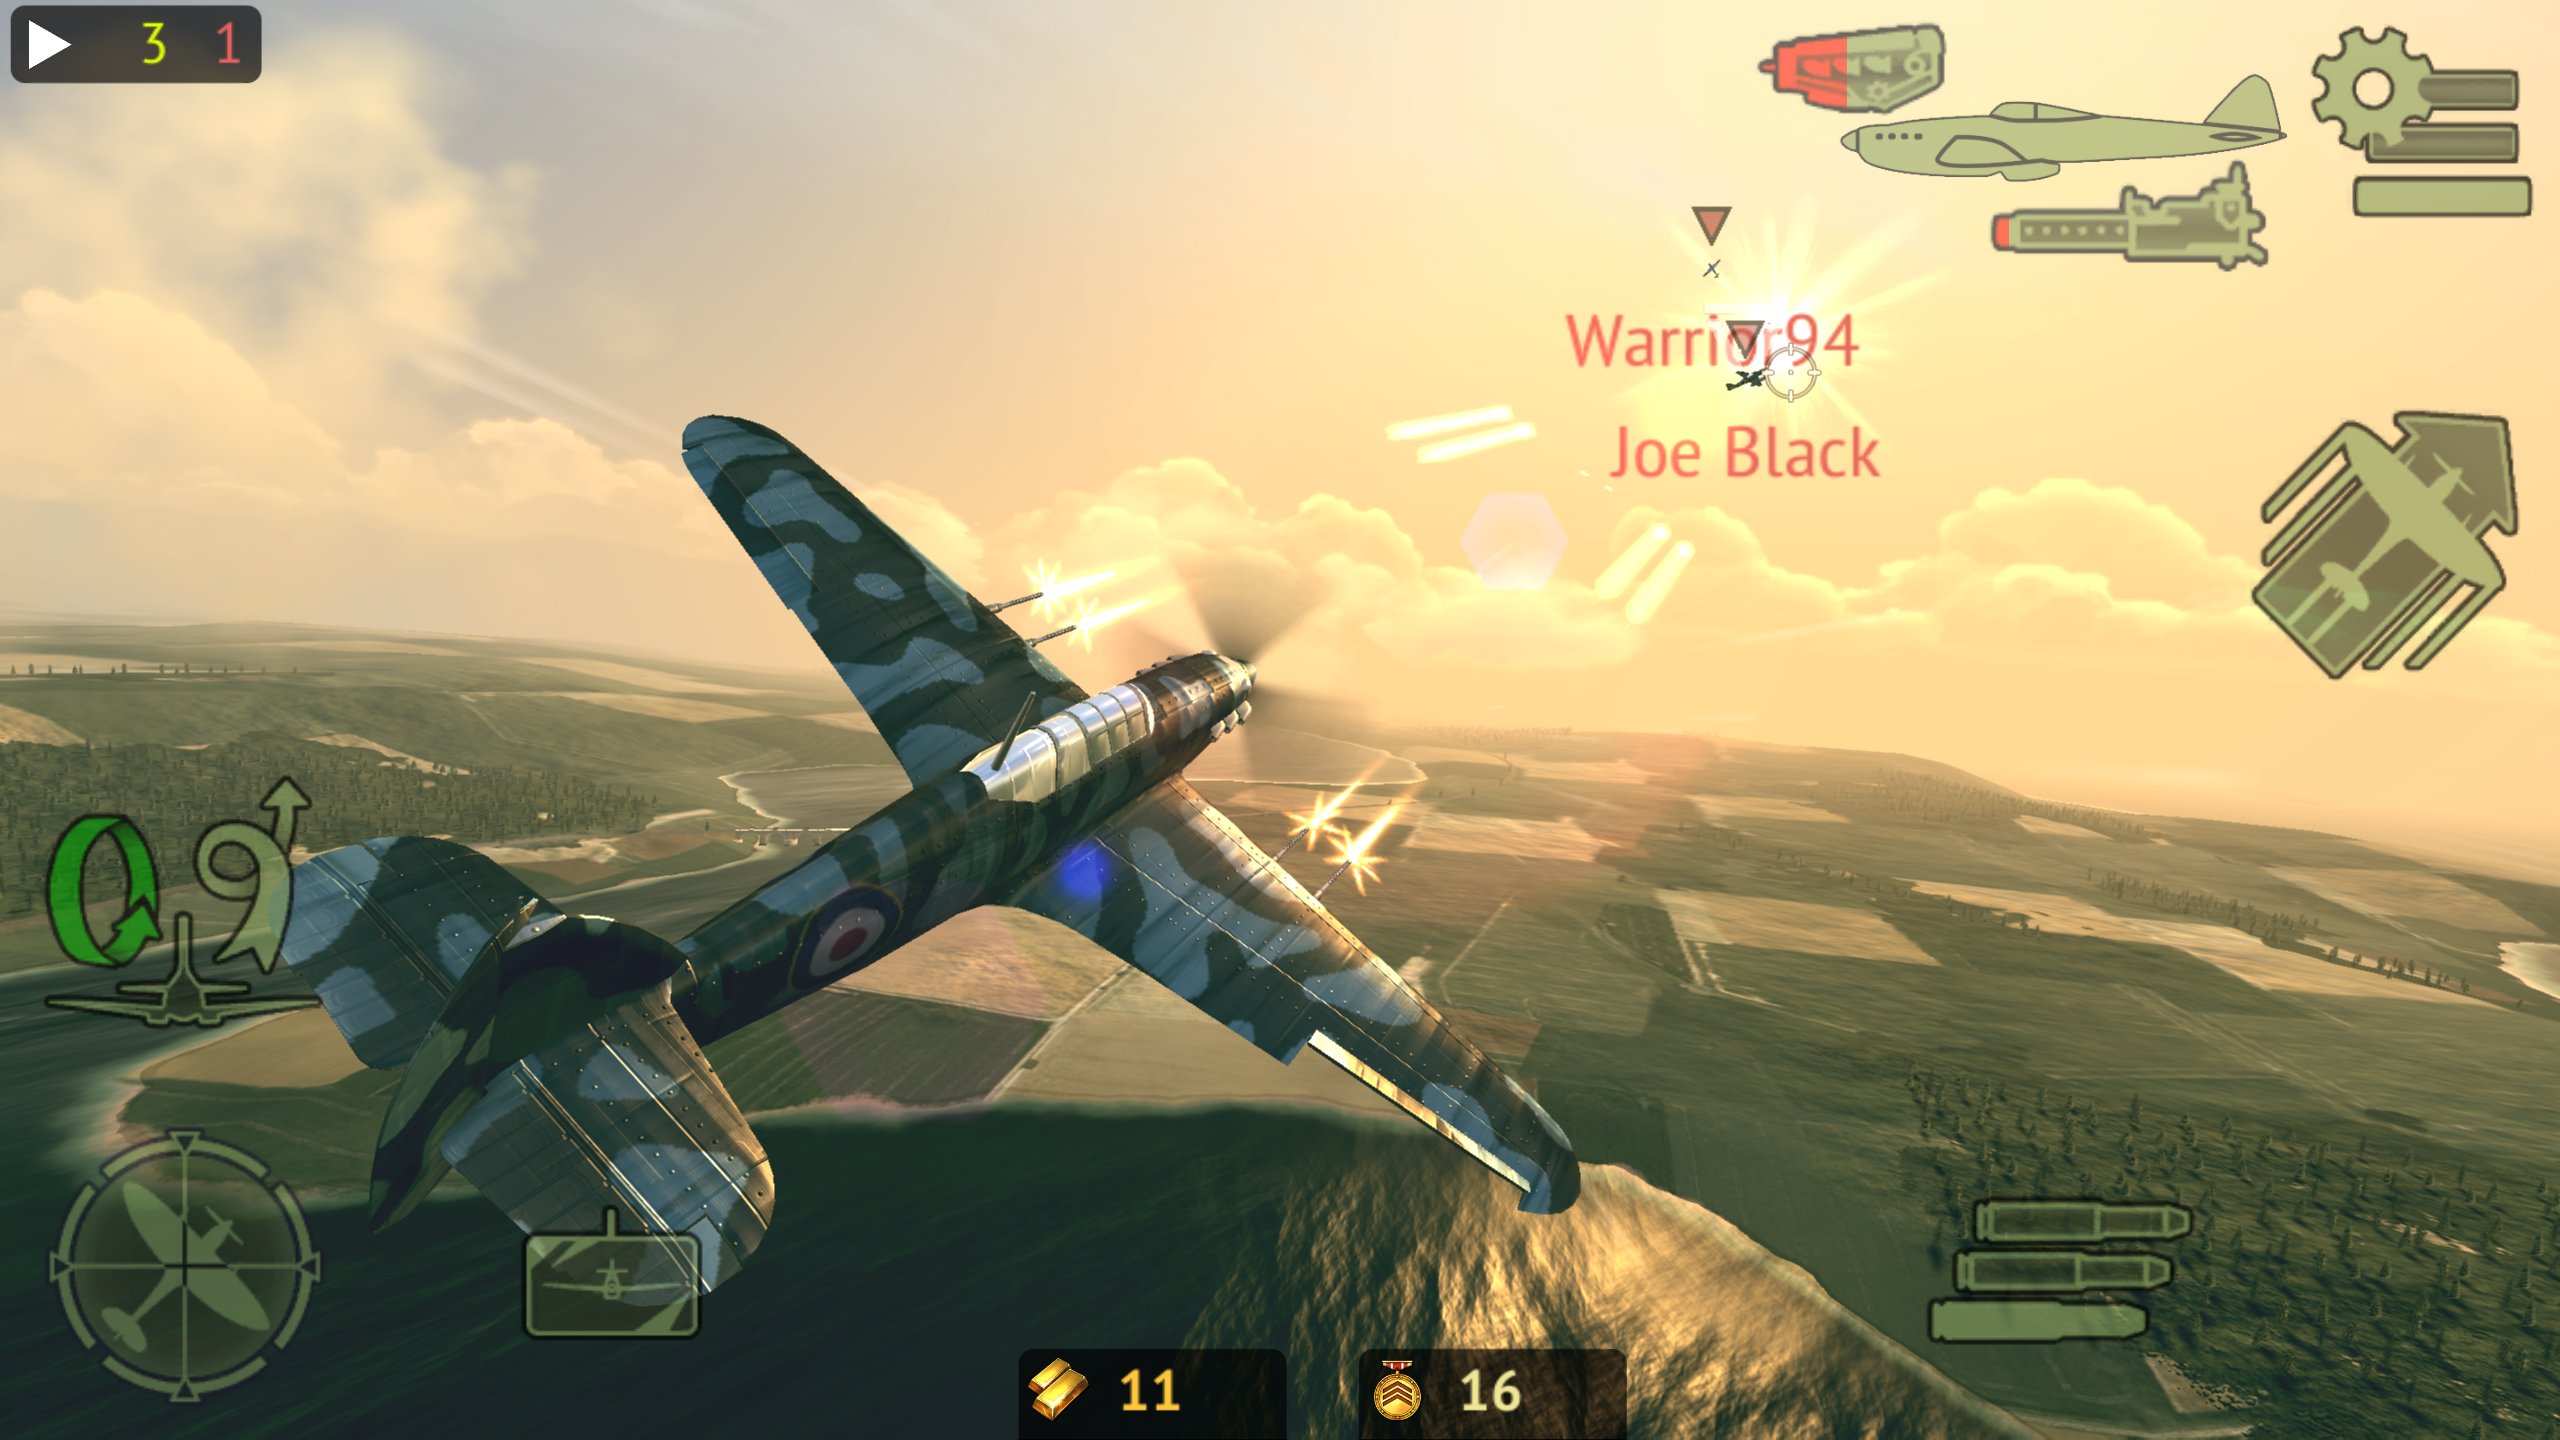 Screenshot 1 of Боевые самолеты: онлайн-бой 1.6